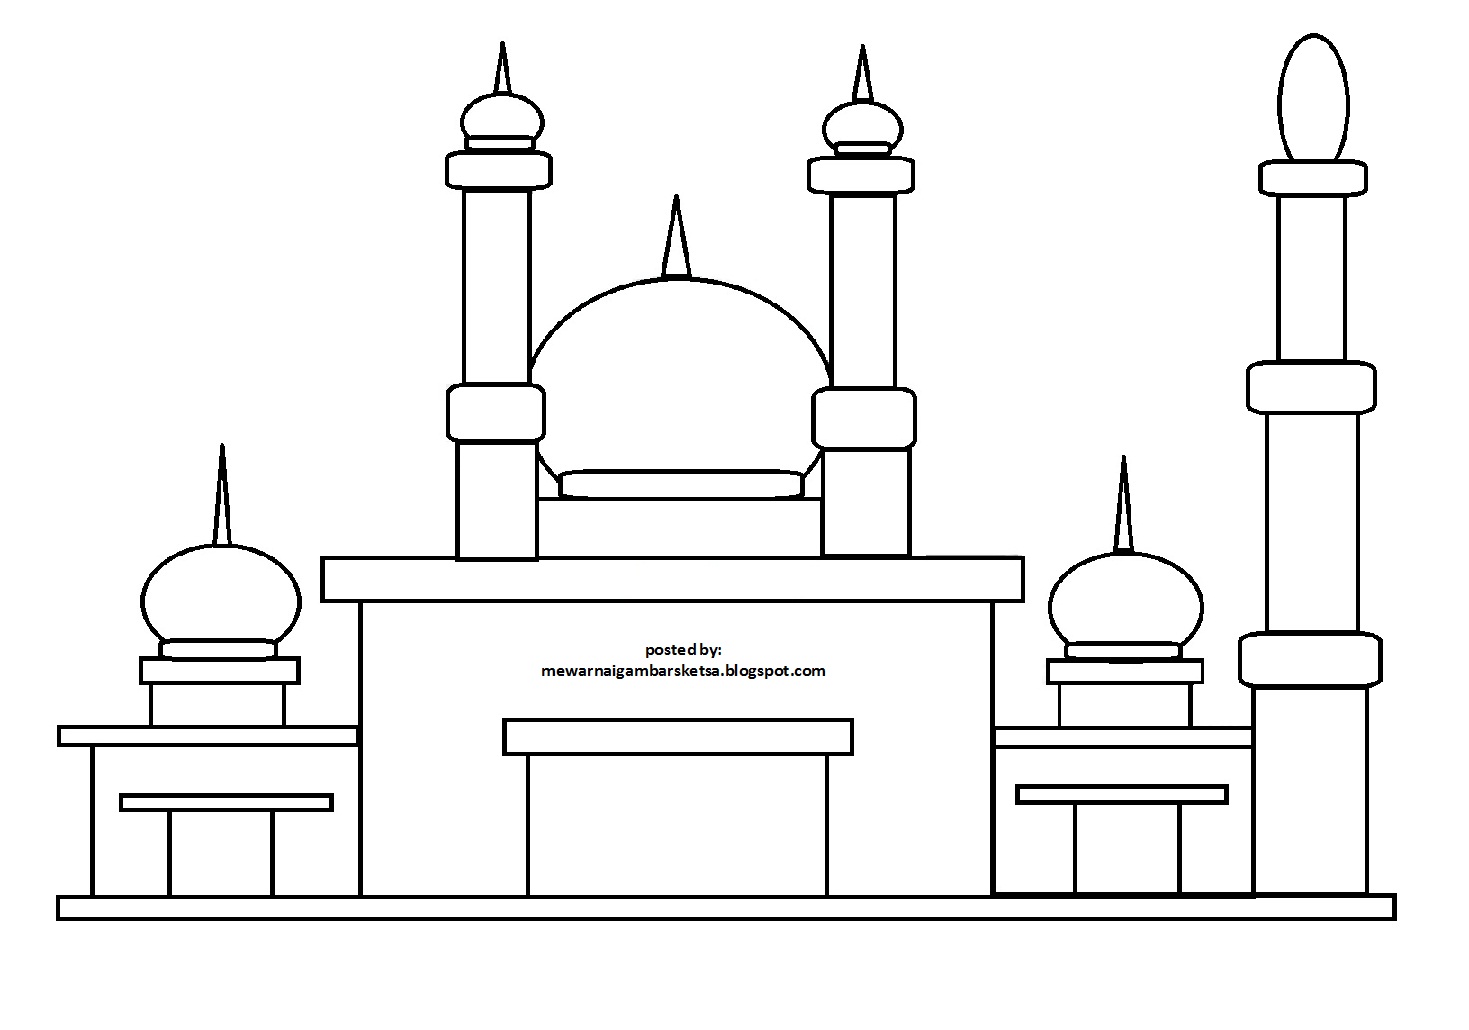 Mewarnai Gambar Sketsa Masjid 32 Download